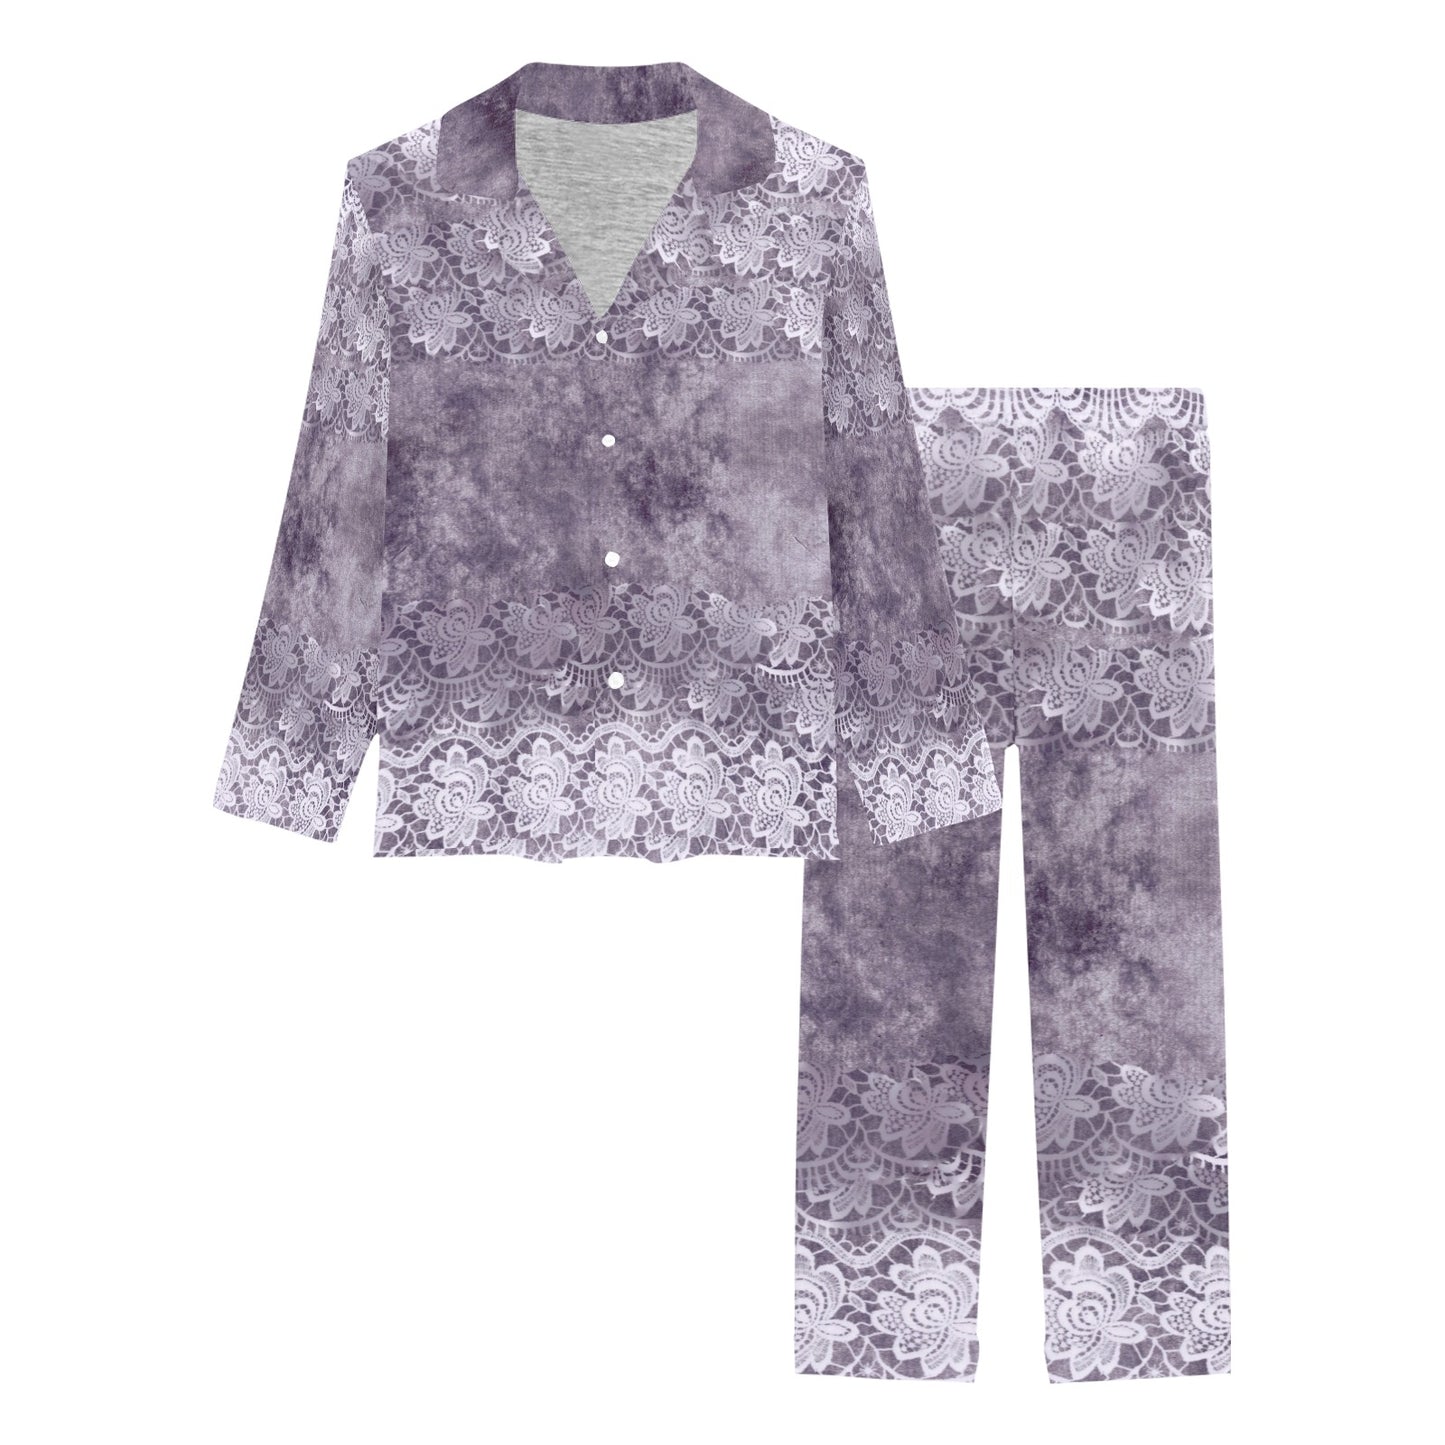 Victorian printed lace pajama set, design 39 Women's Long Pajama Set (Sets 02)